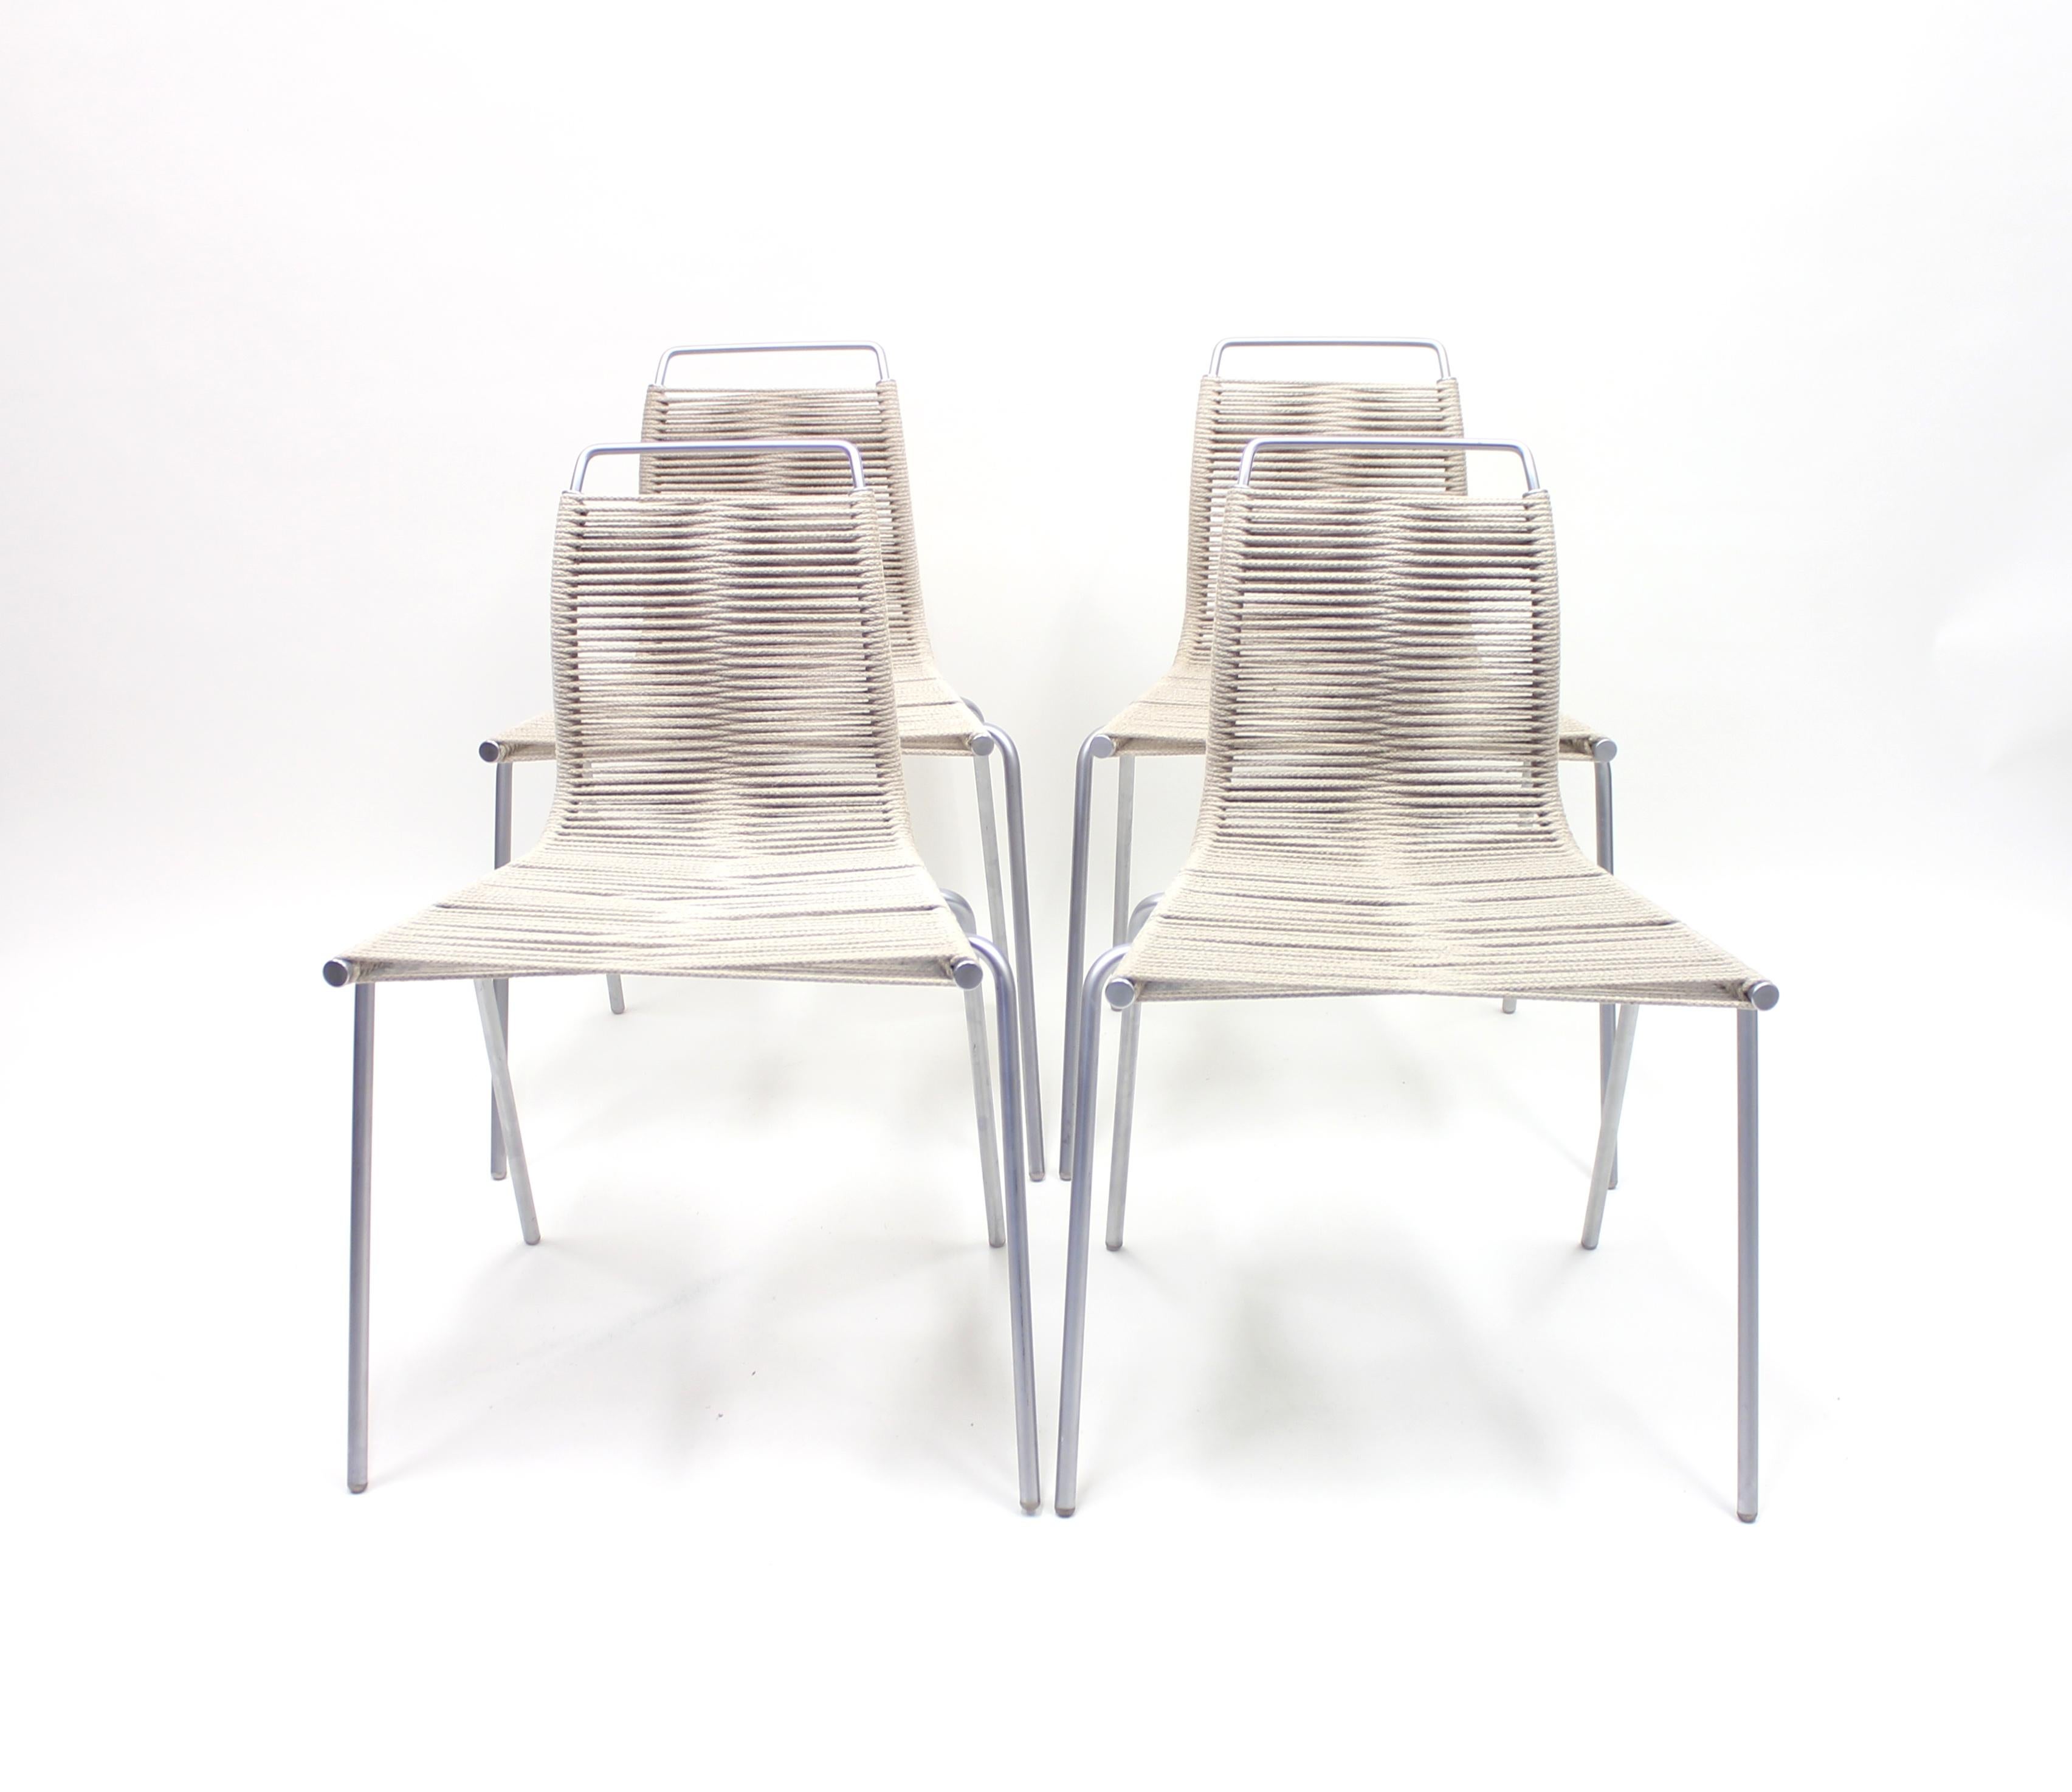 Scandinavian Modern PK1 Chairs by Poul Kjærholm for Thorsen Møbler, Set of 4